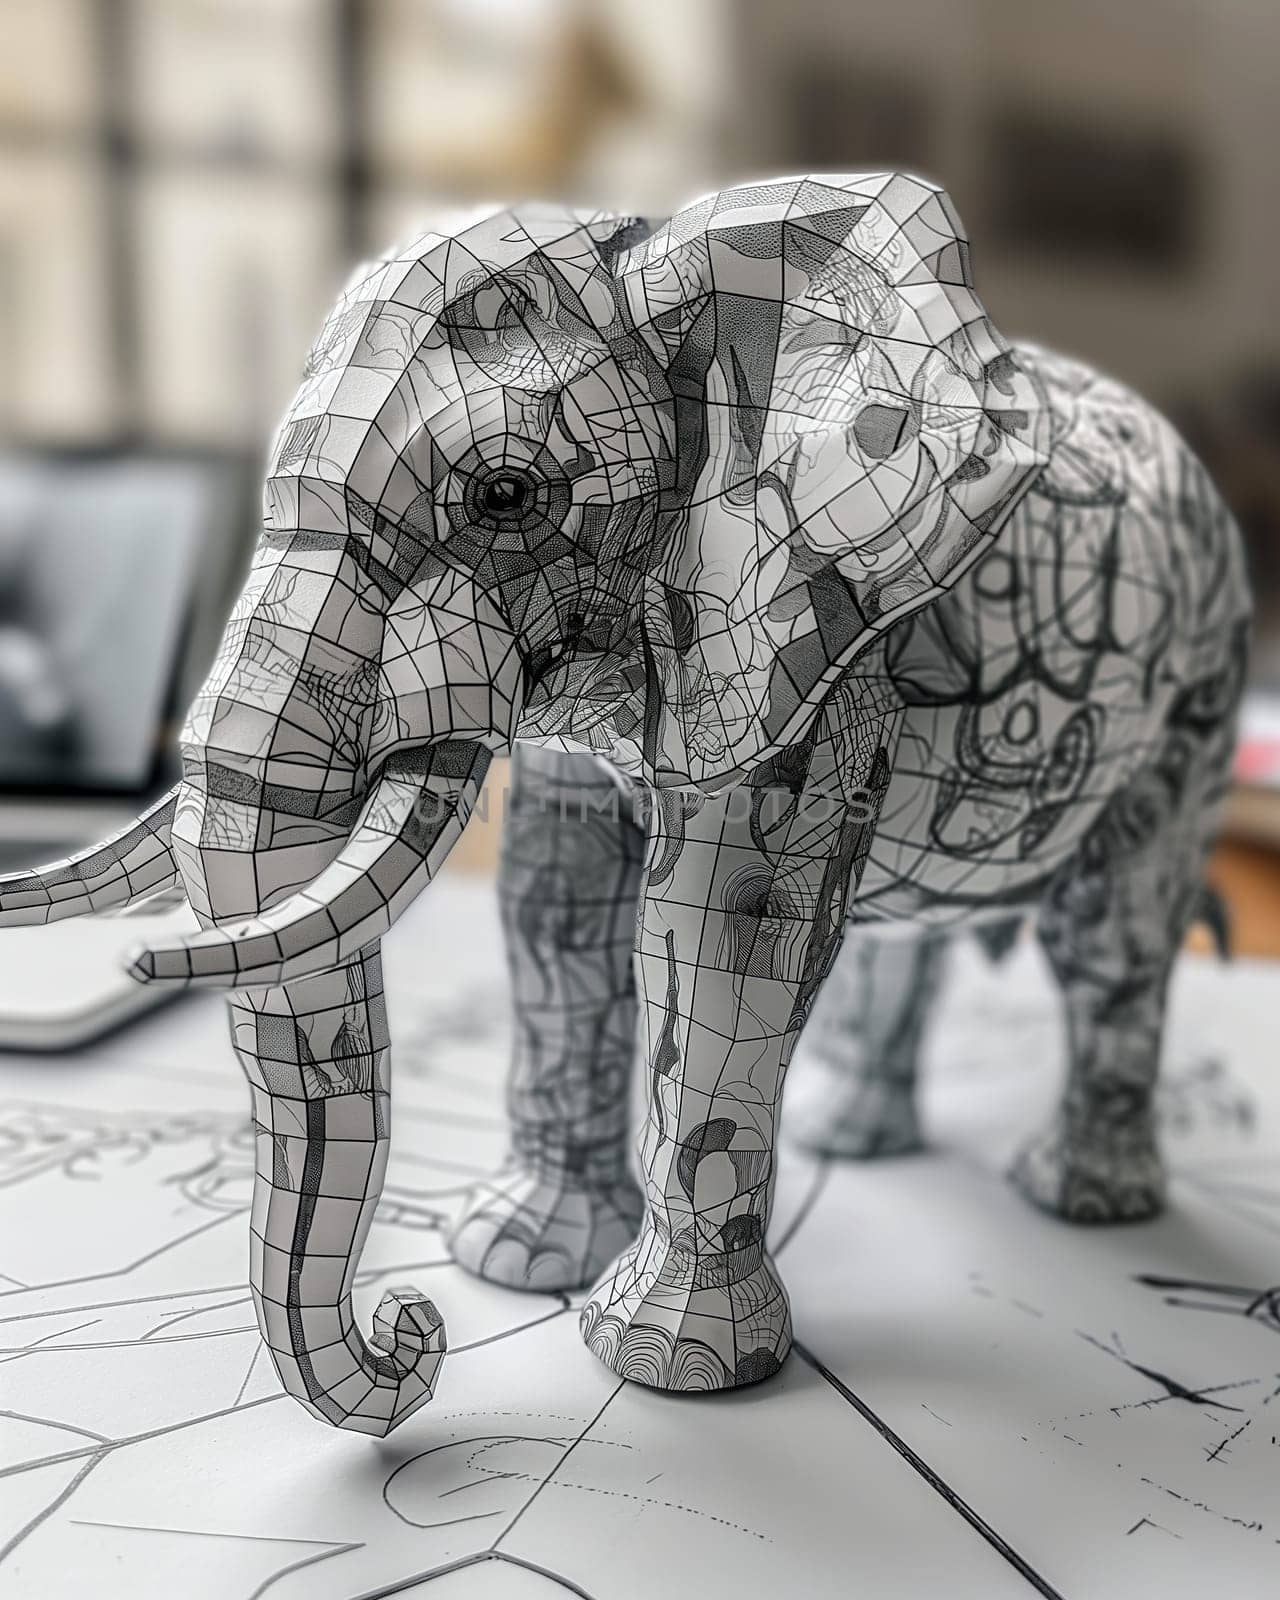 Wireframe Elephant Design in Modern Office. by Fischeron